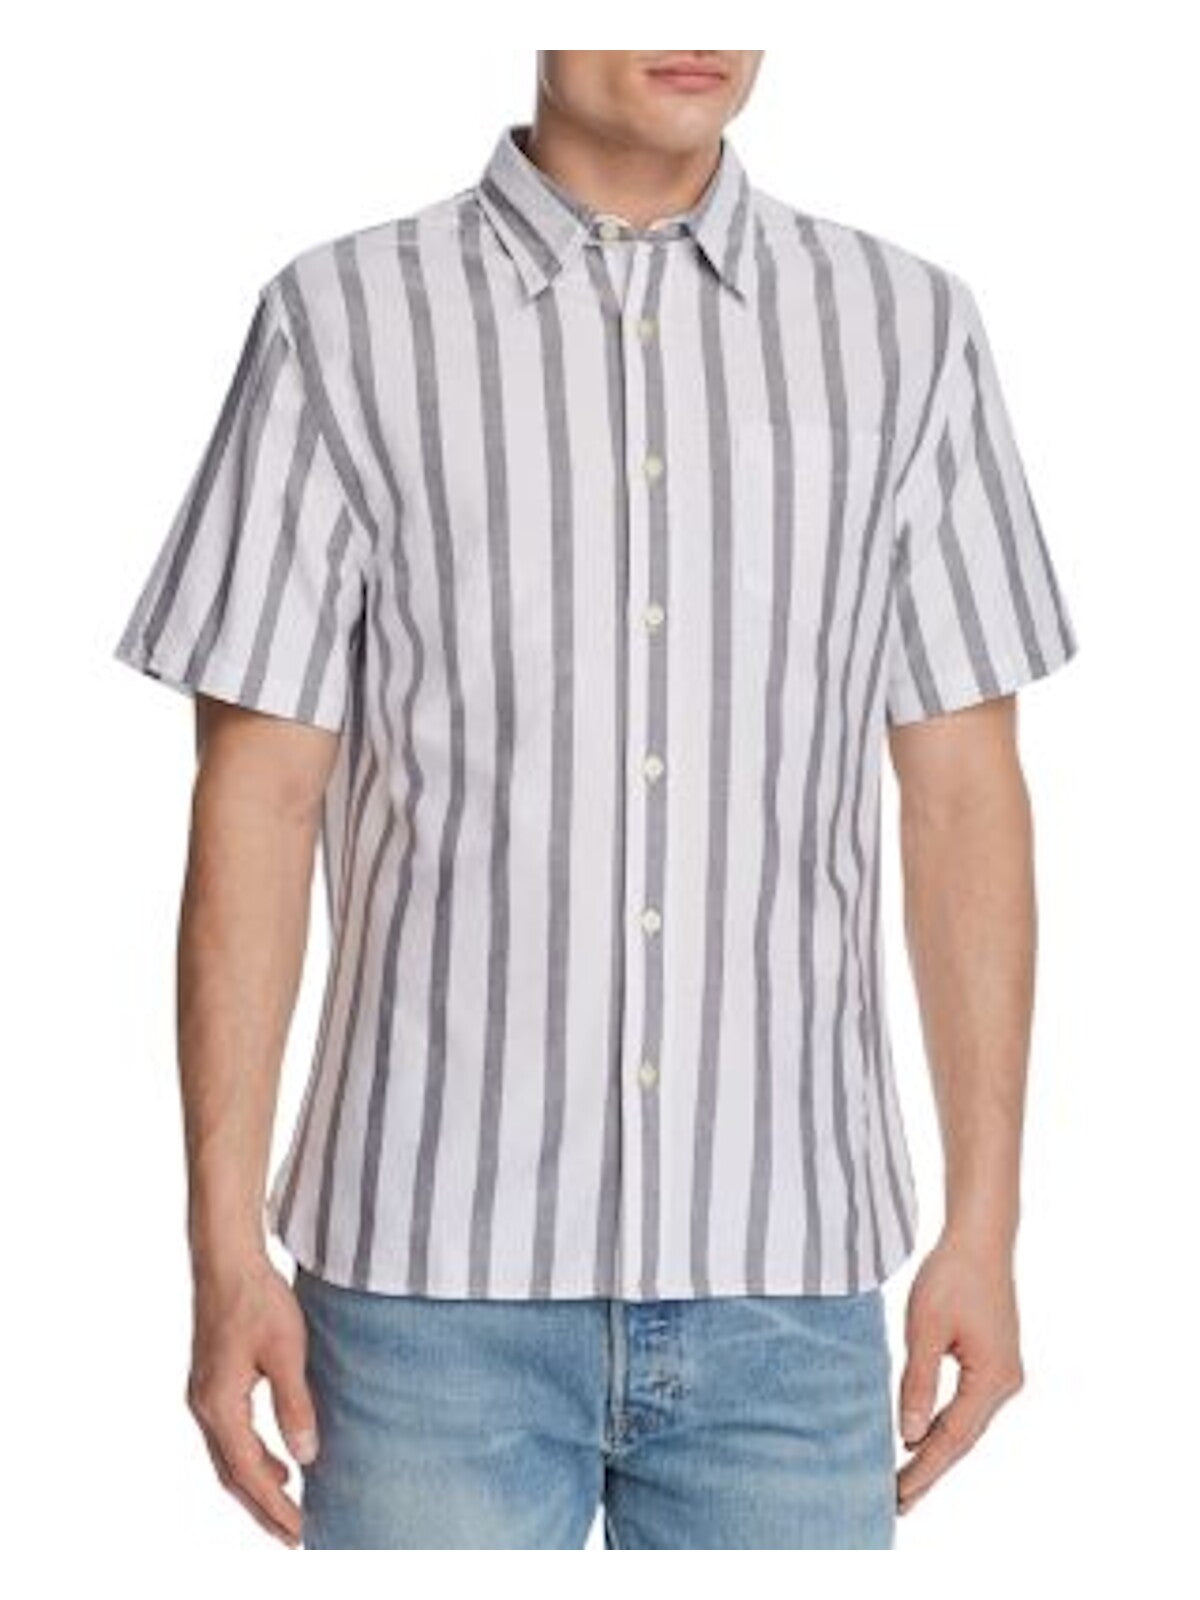 JACHS NEW YORK Mens Gray Striped Collared Shirt XL